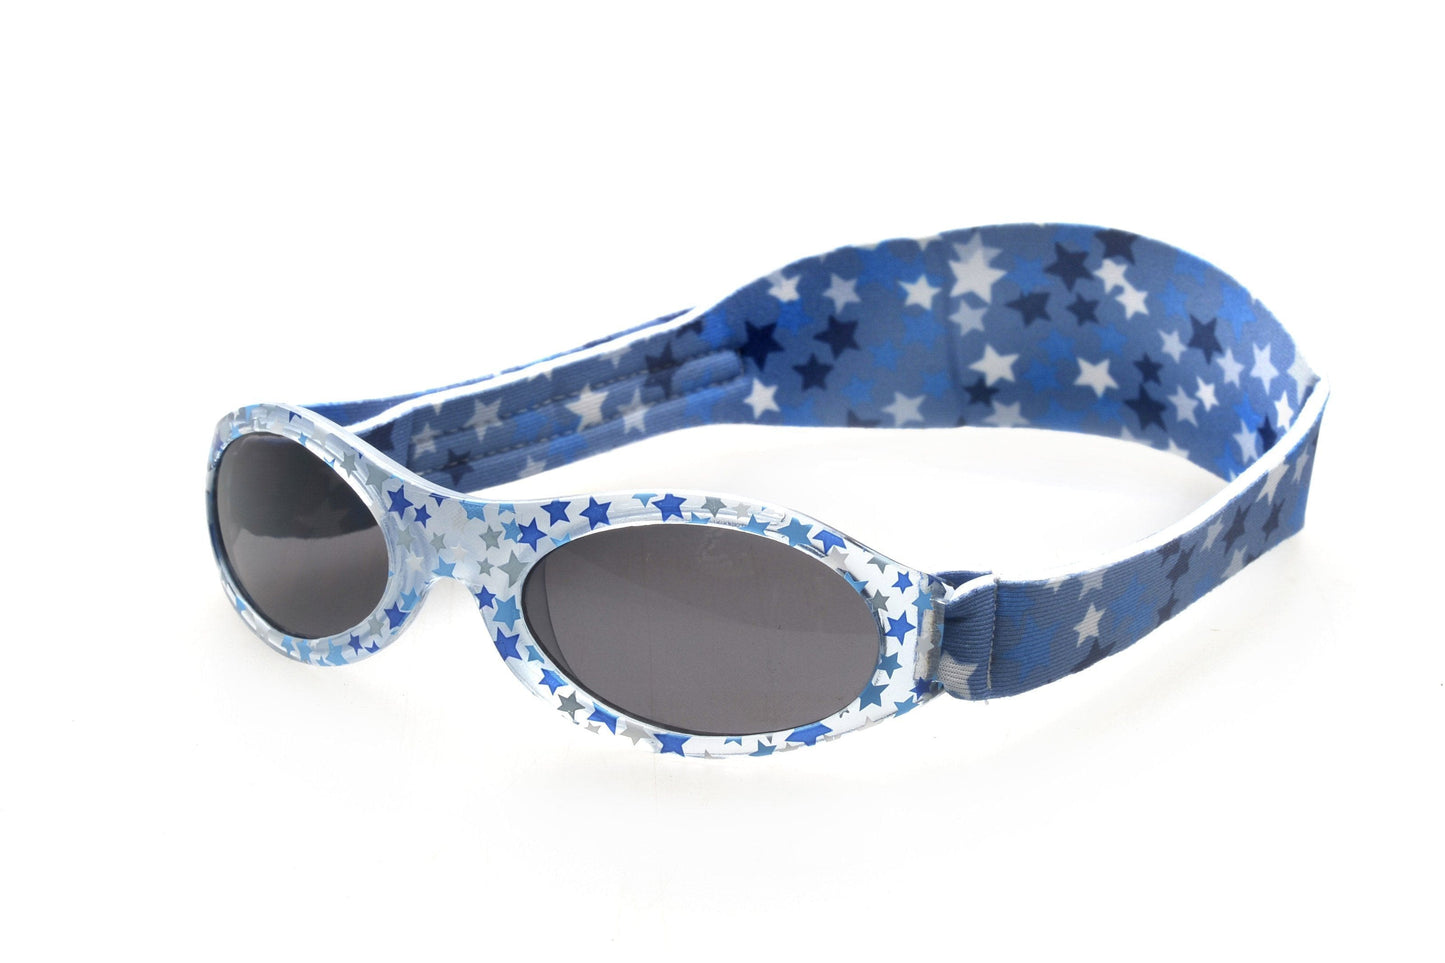 BANZ Sunglasses Baby Sunglasses - Bubzee Polarized Wrap Around Starry Night